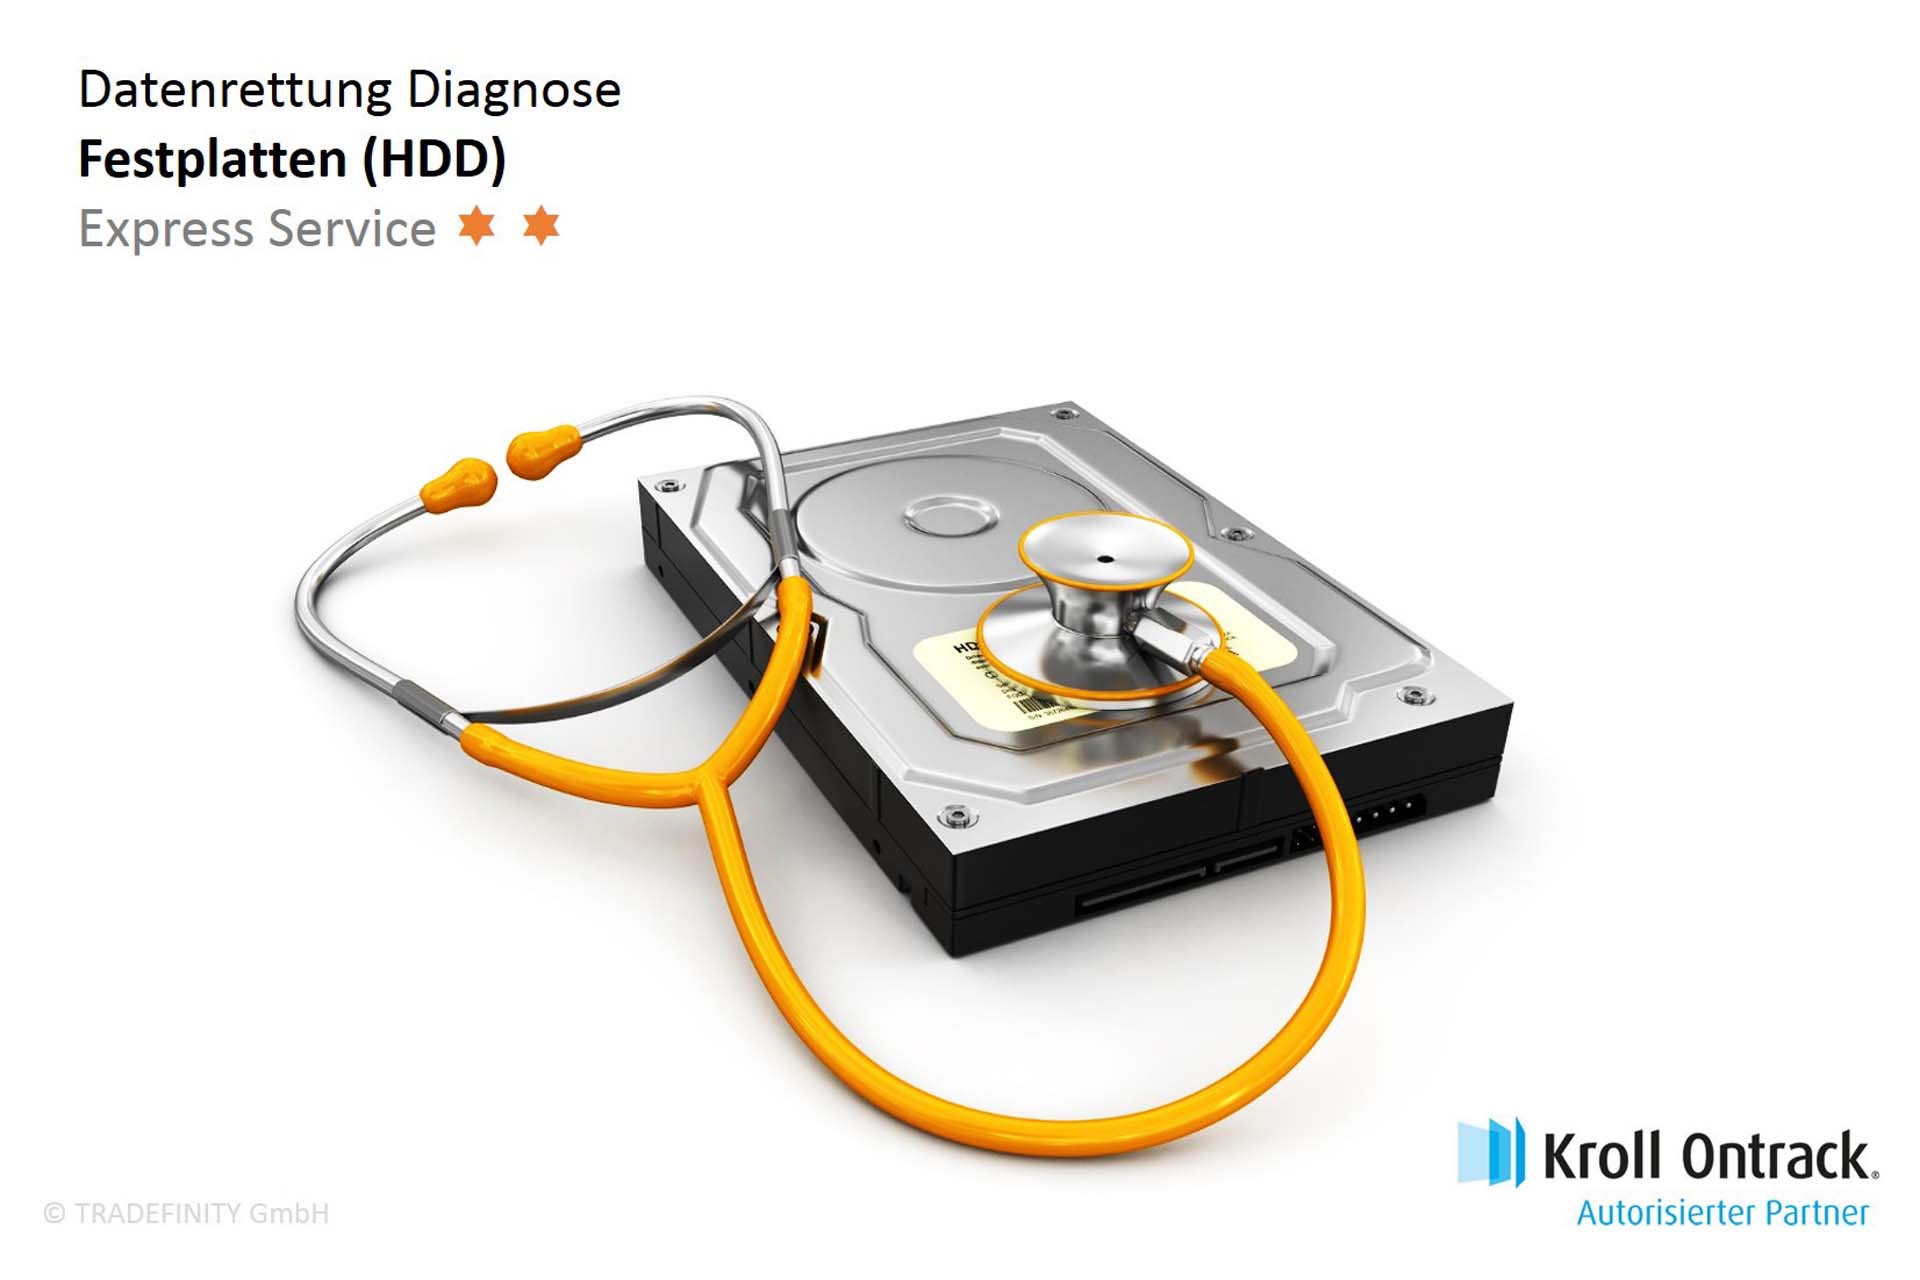 Datenrettung Diagnose (Express Service) von HDD